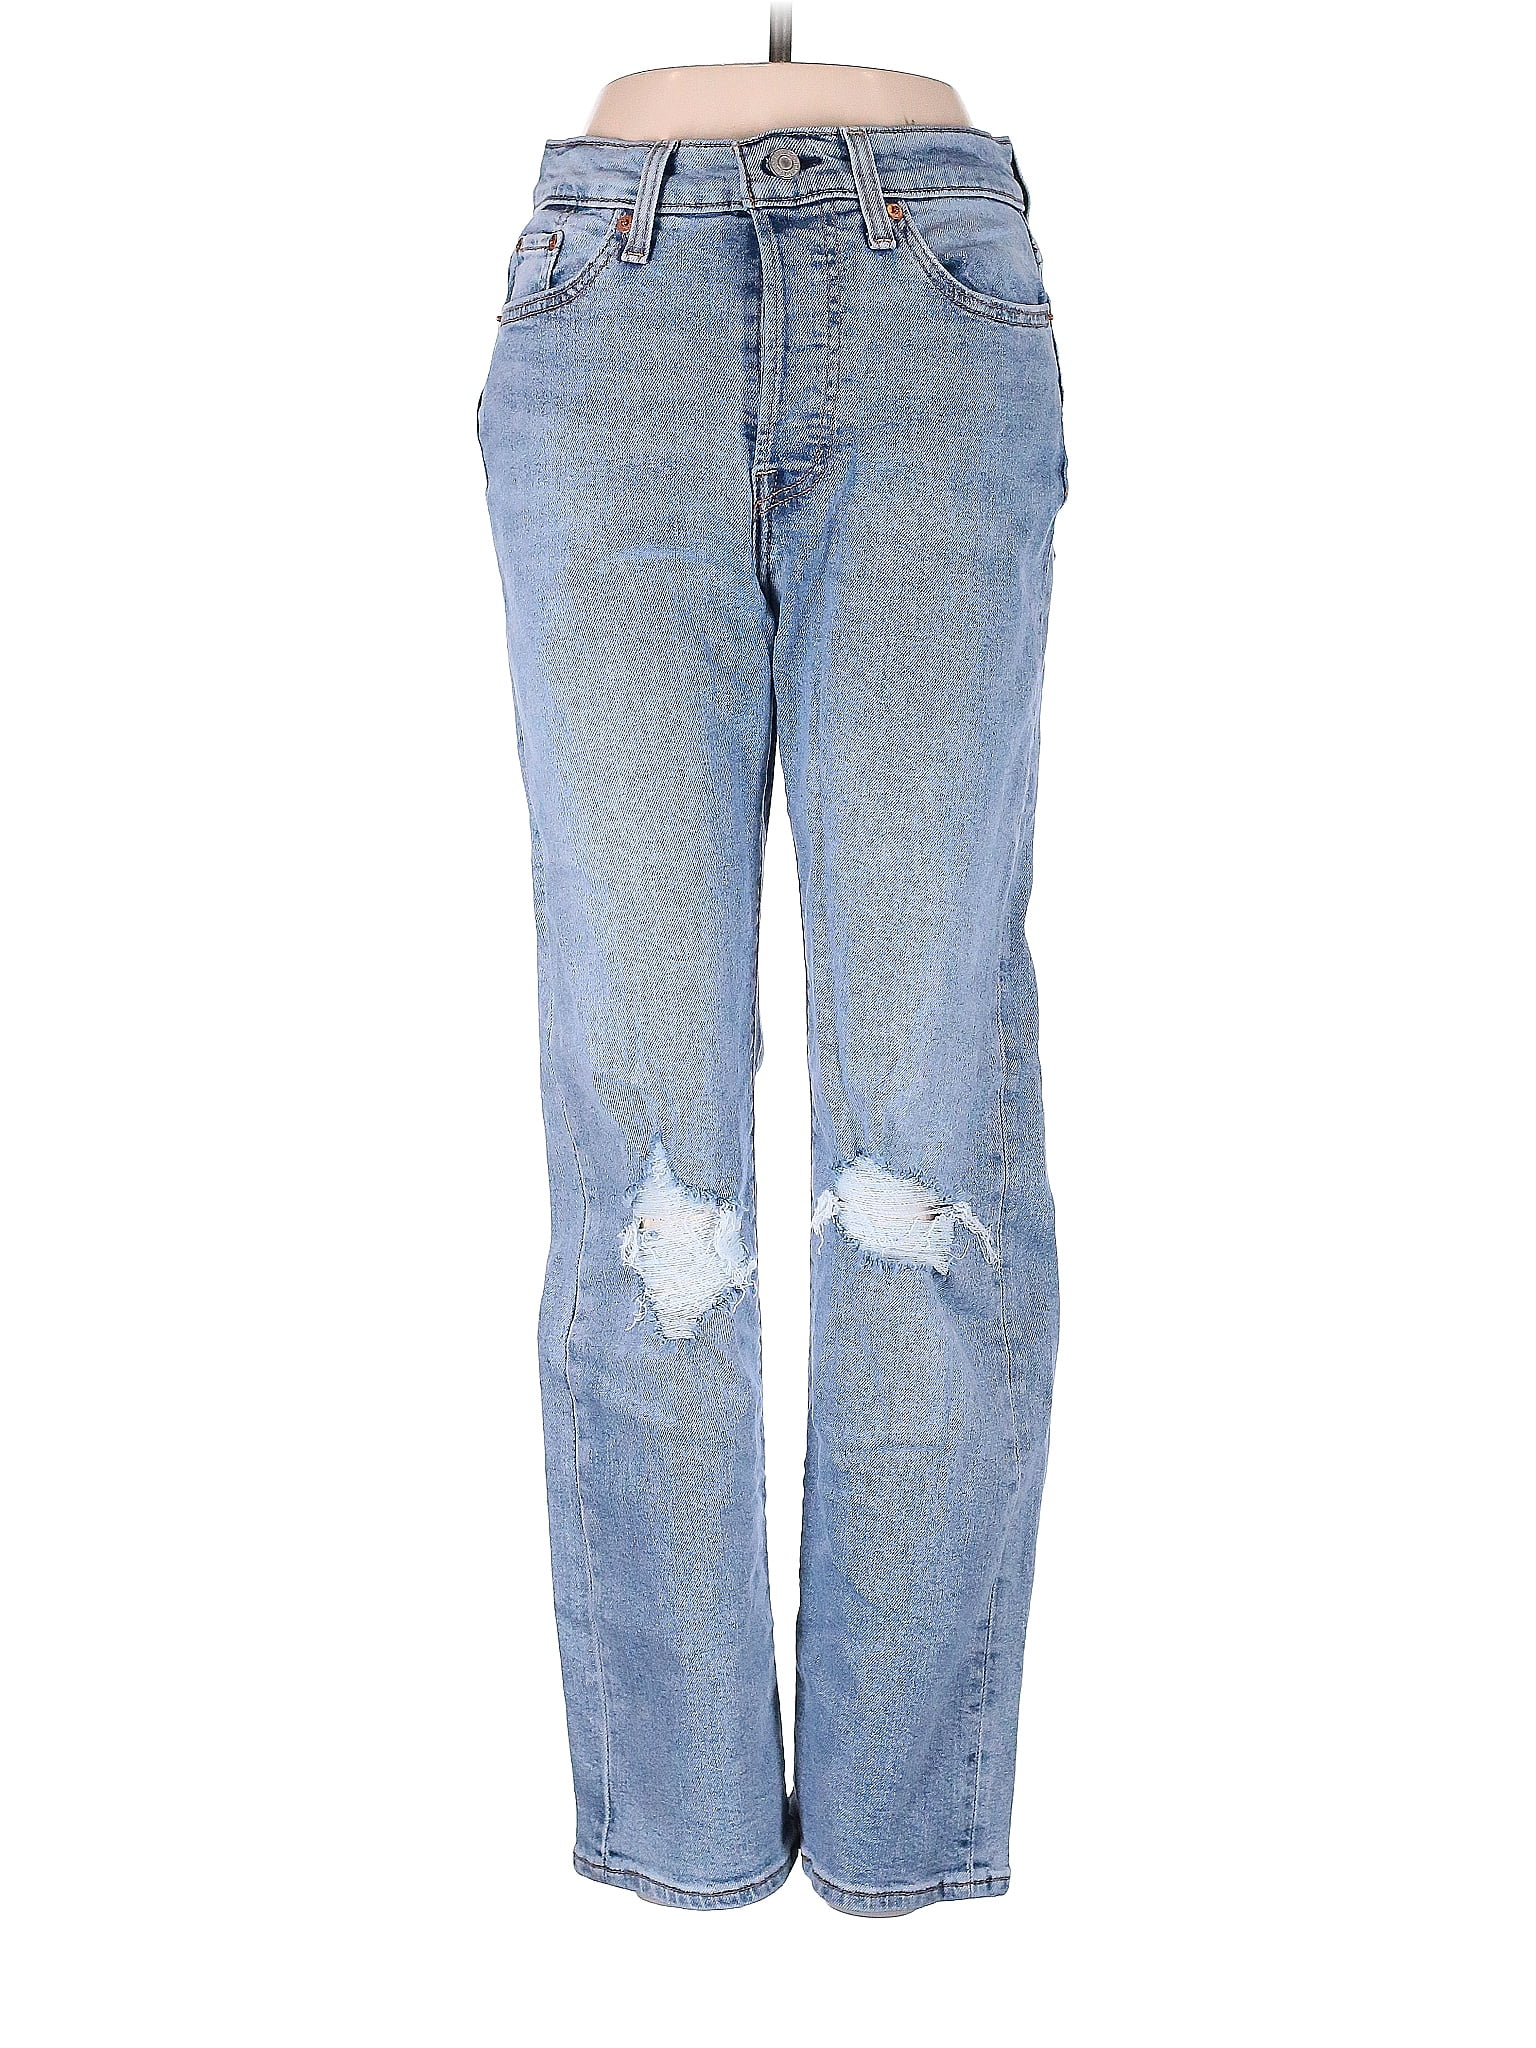 Levi's Solid Blue Jeans 28 Waist - 59% off | thredUP